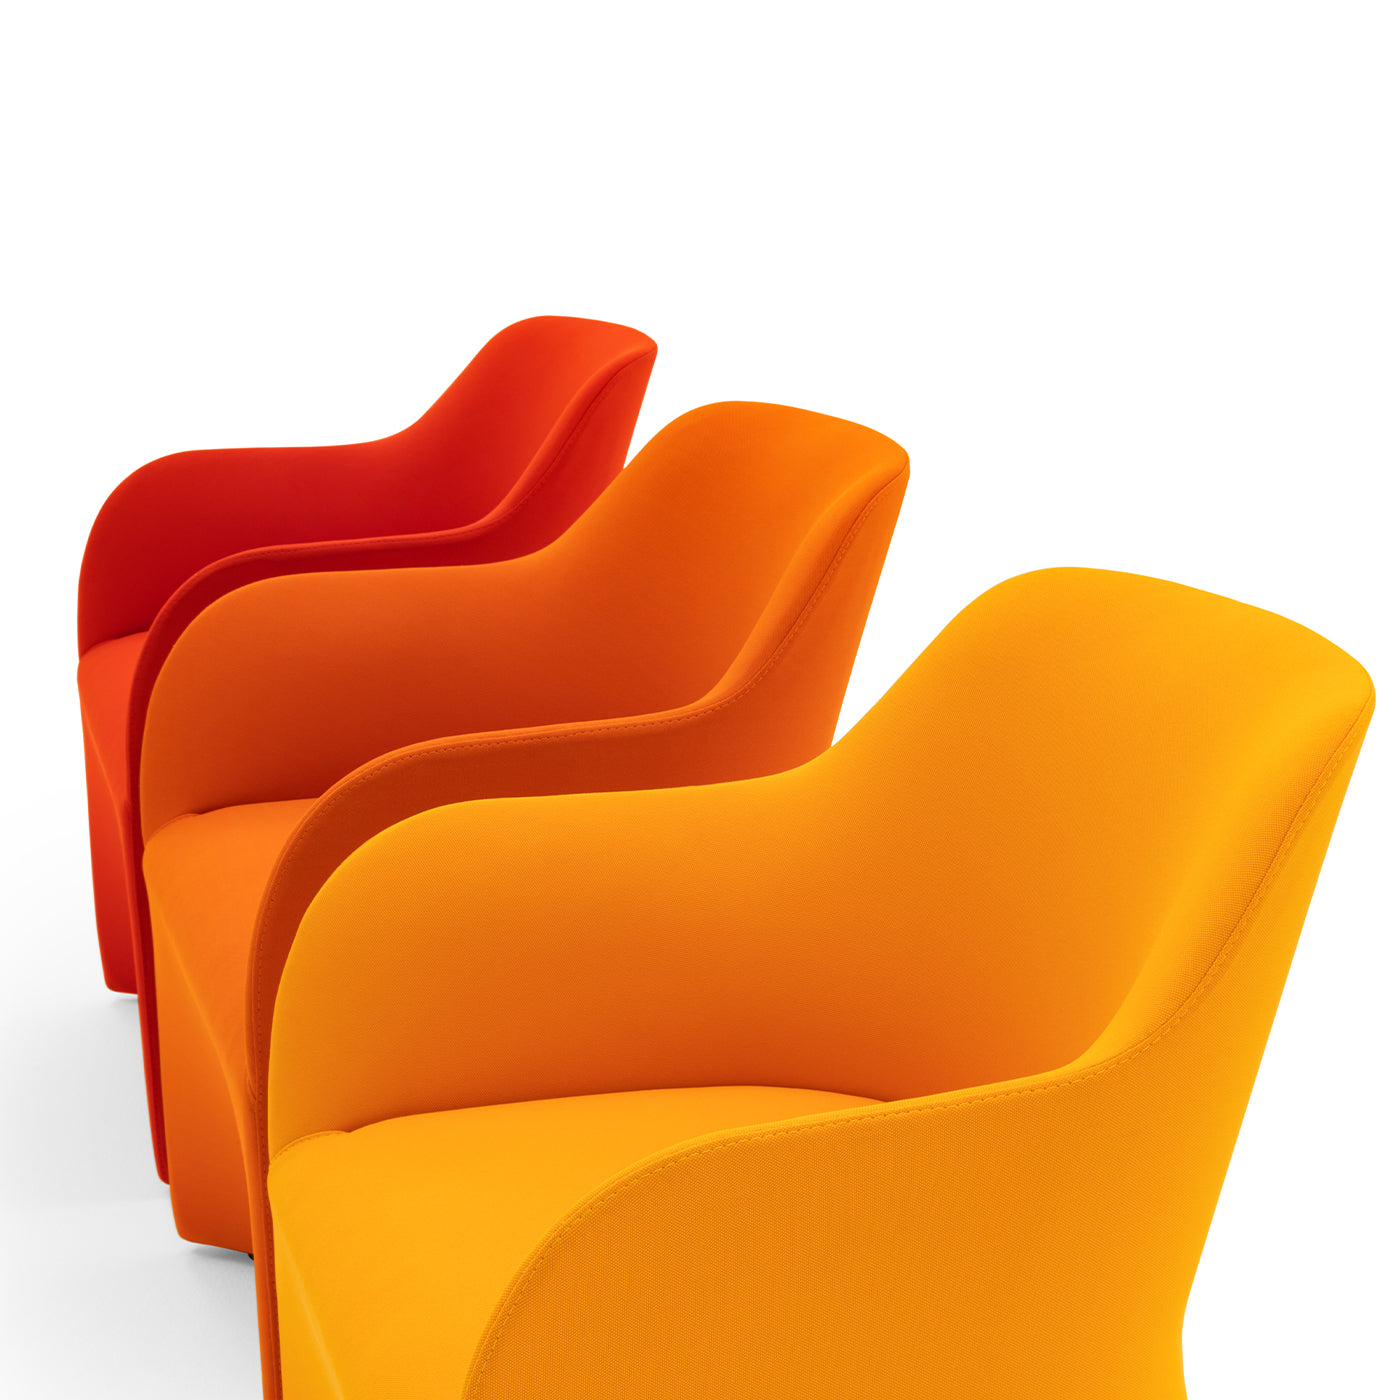 Maggy Big Orange Armchair by Basaglia + Rota Nodari - Alternative view 1